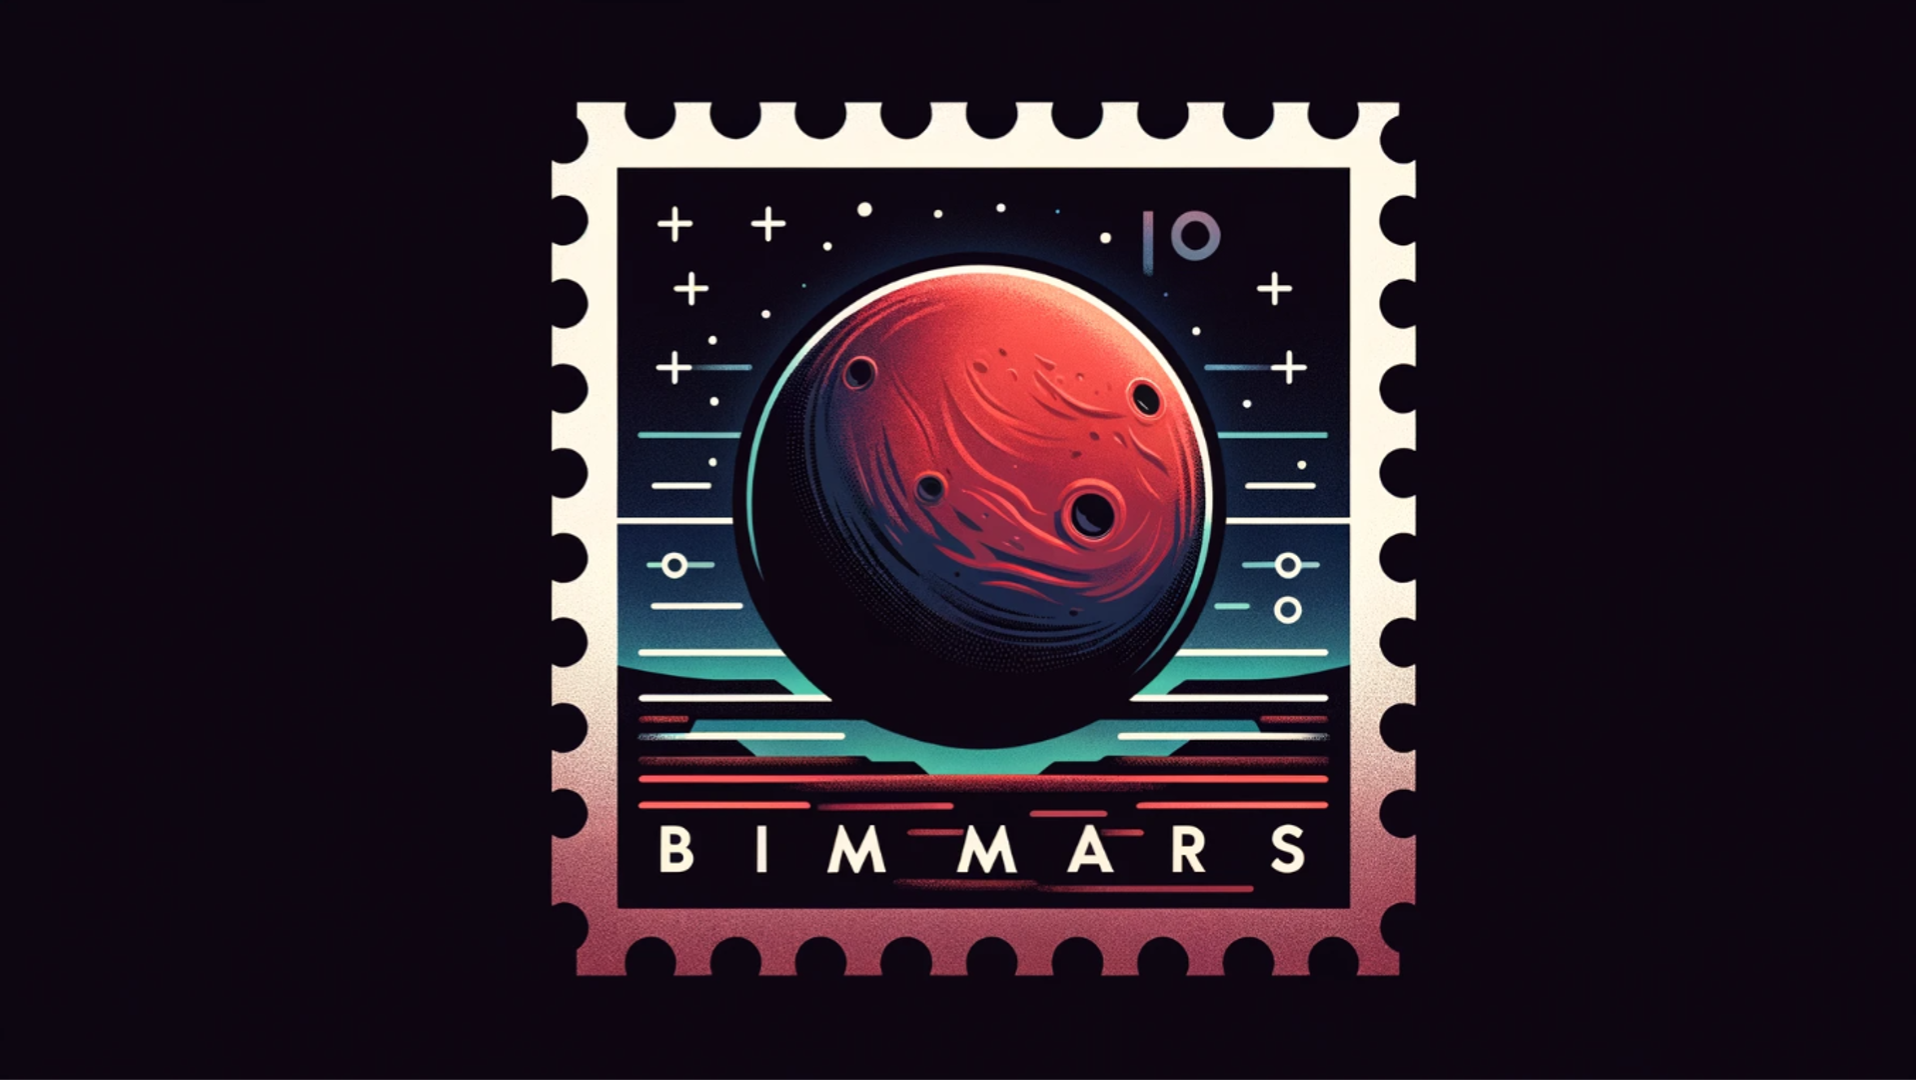 BIM Mars, from Oppy to Curiosity